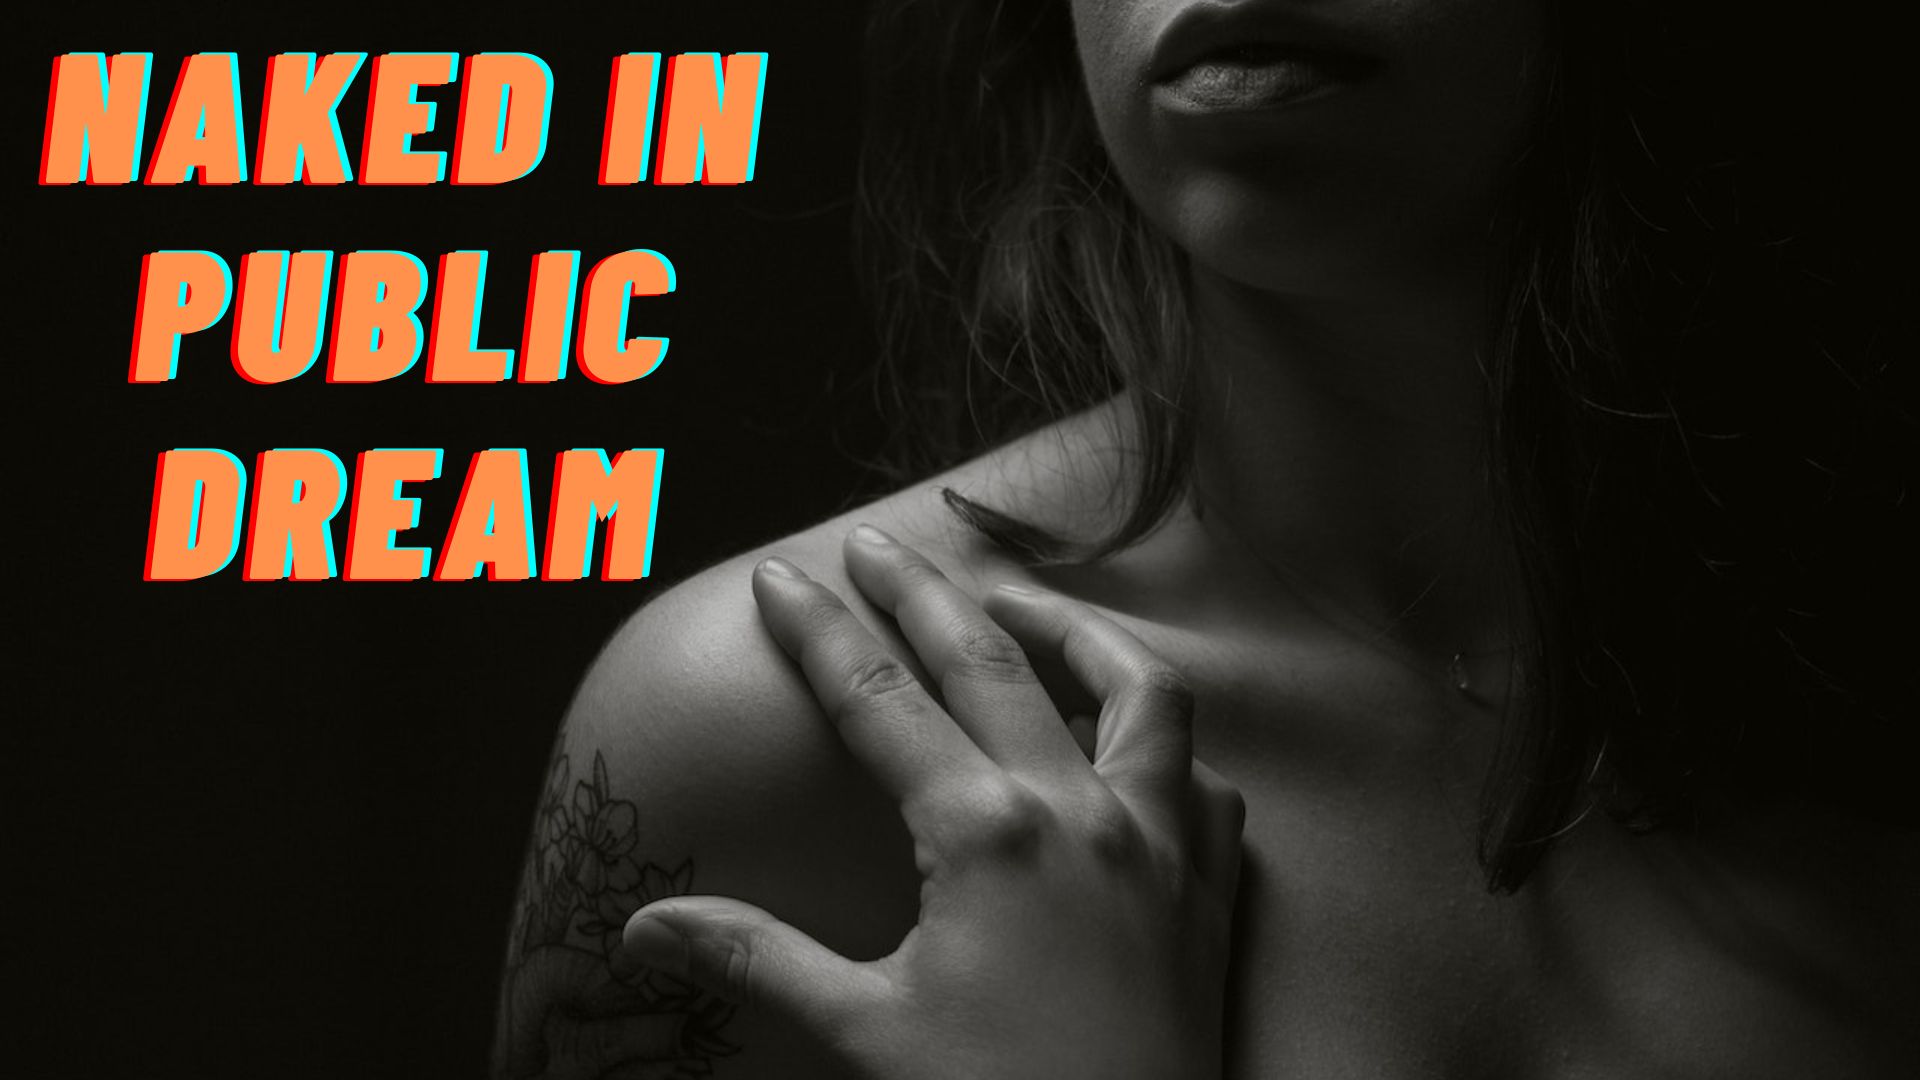 Naked In Public Dream - Symbolize Feelings Of Vulnerability Or Shame